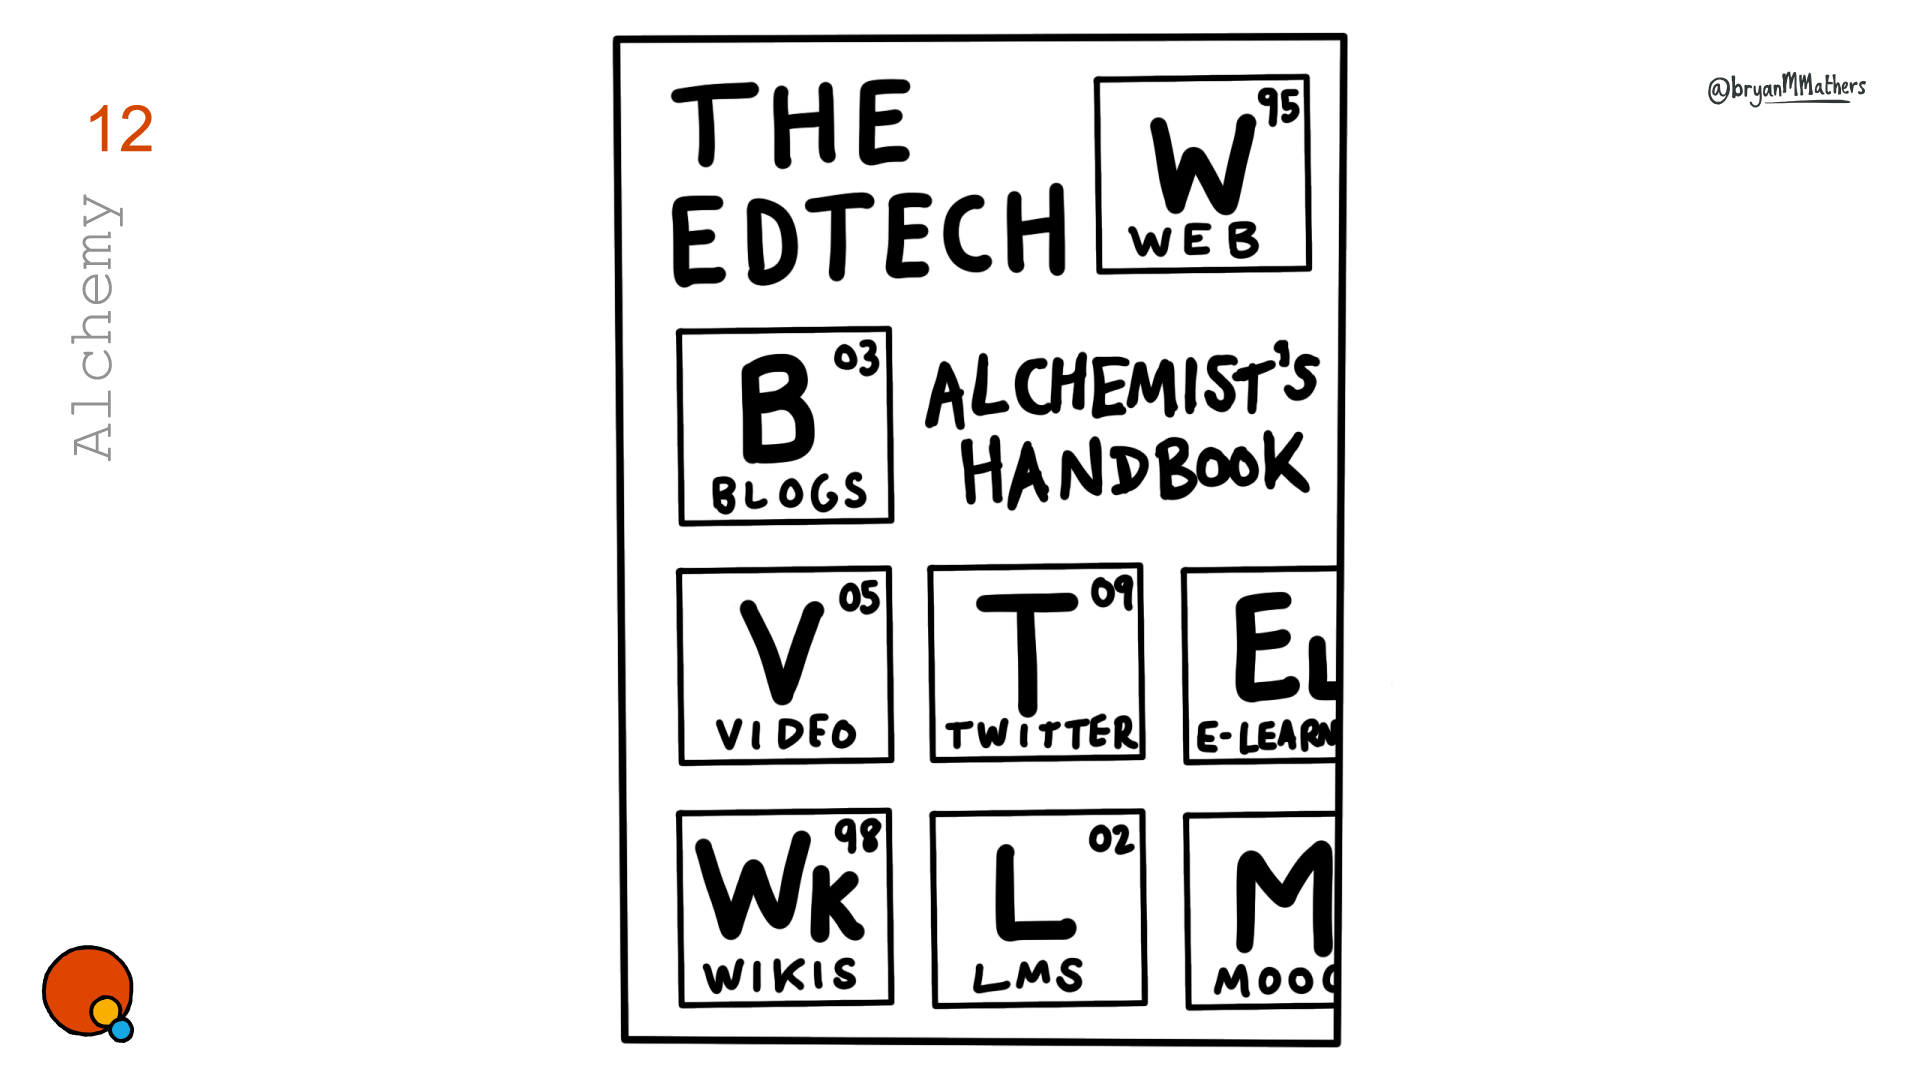 25 Years of EdTech - Alchemist's Handbook